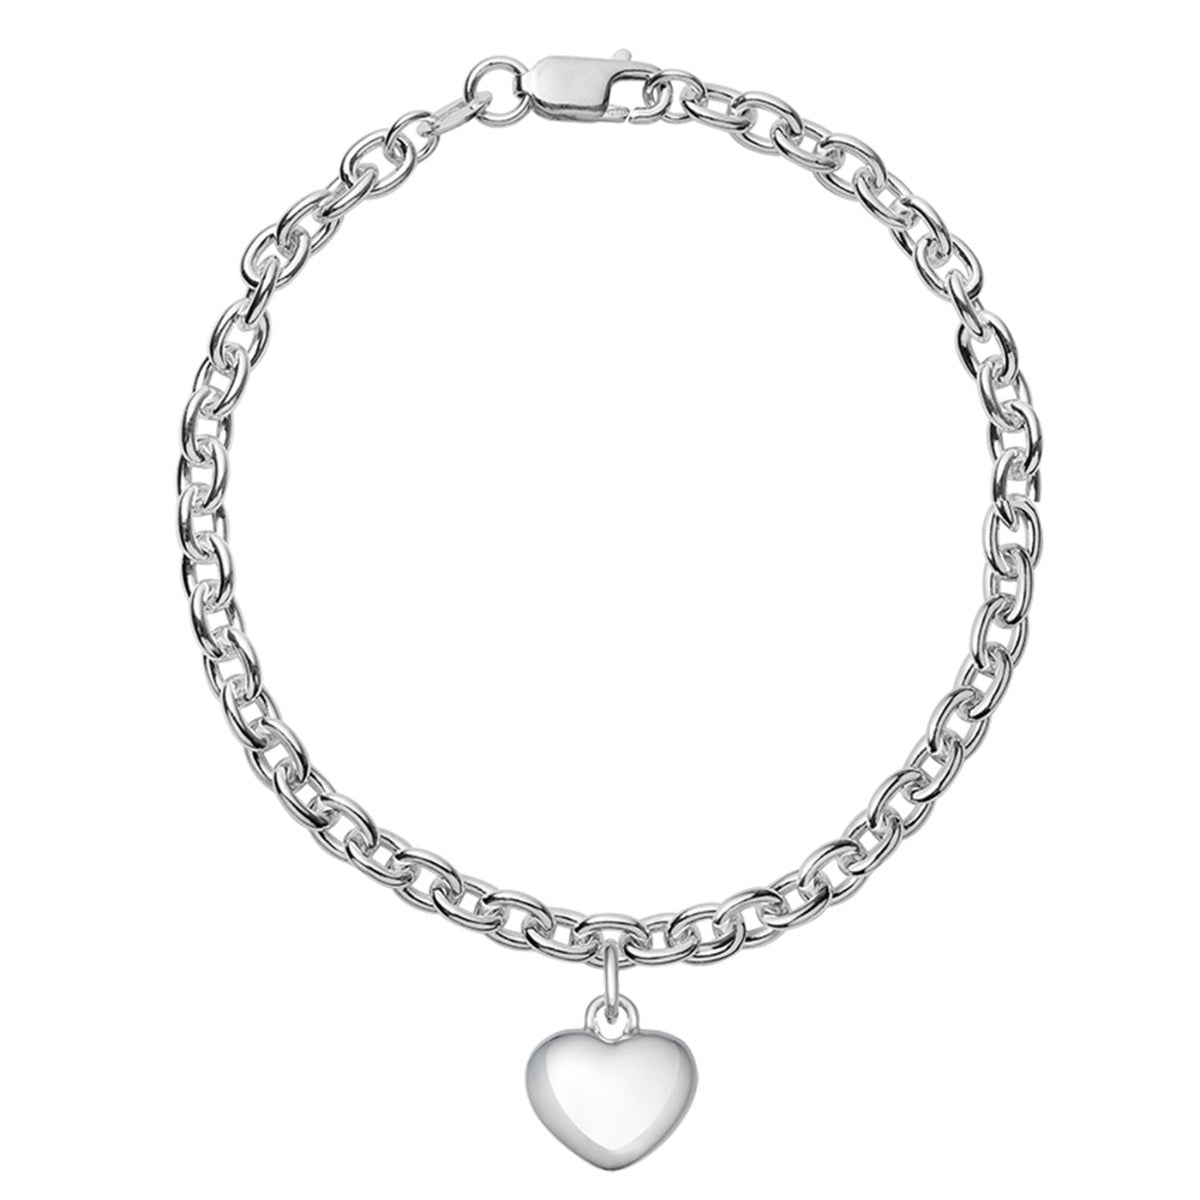 Silver Heart Chain Bracelet | Hersey & Son Silversmiths